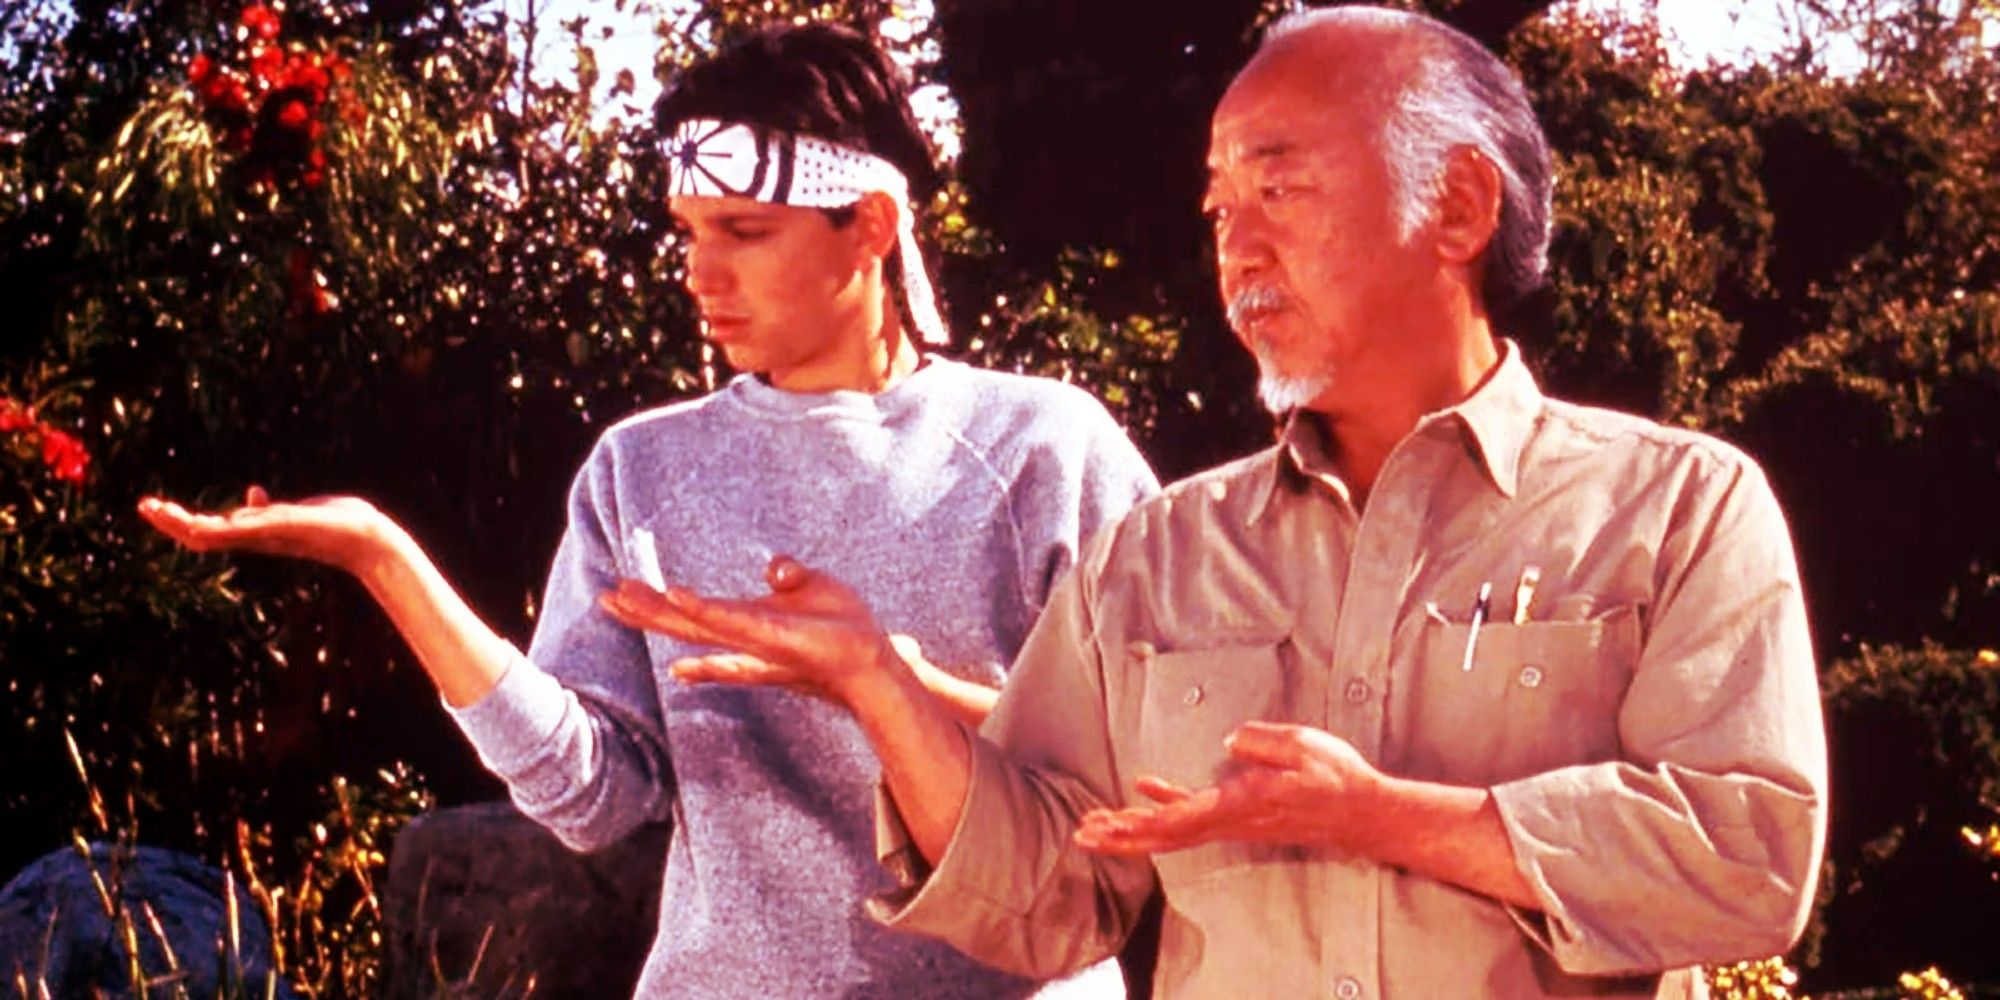 Pat Morita as Mr. Miyagi teaching Ralph Macchio as Daniel in The Karate Kid